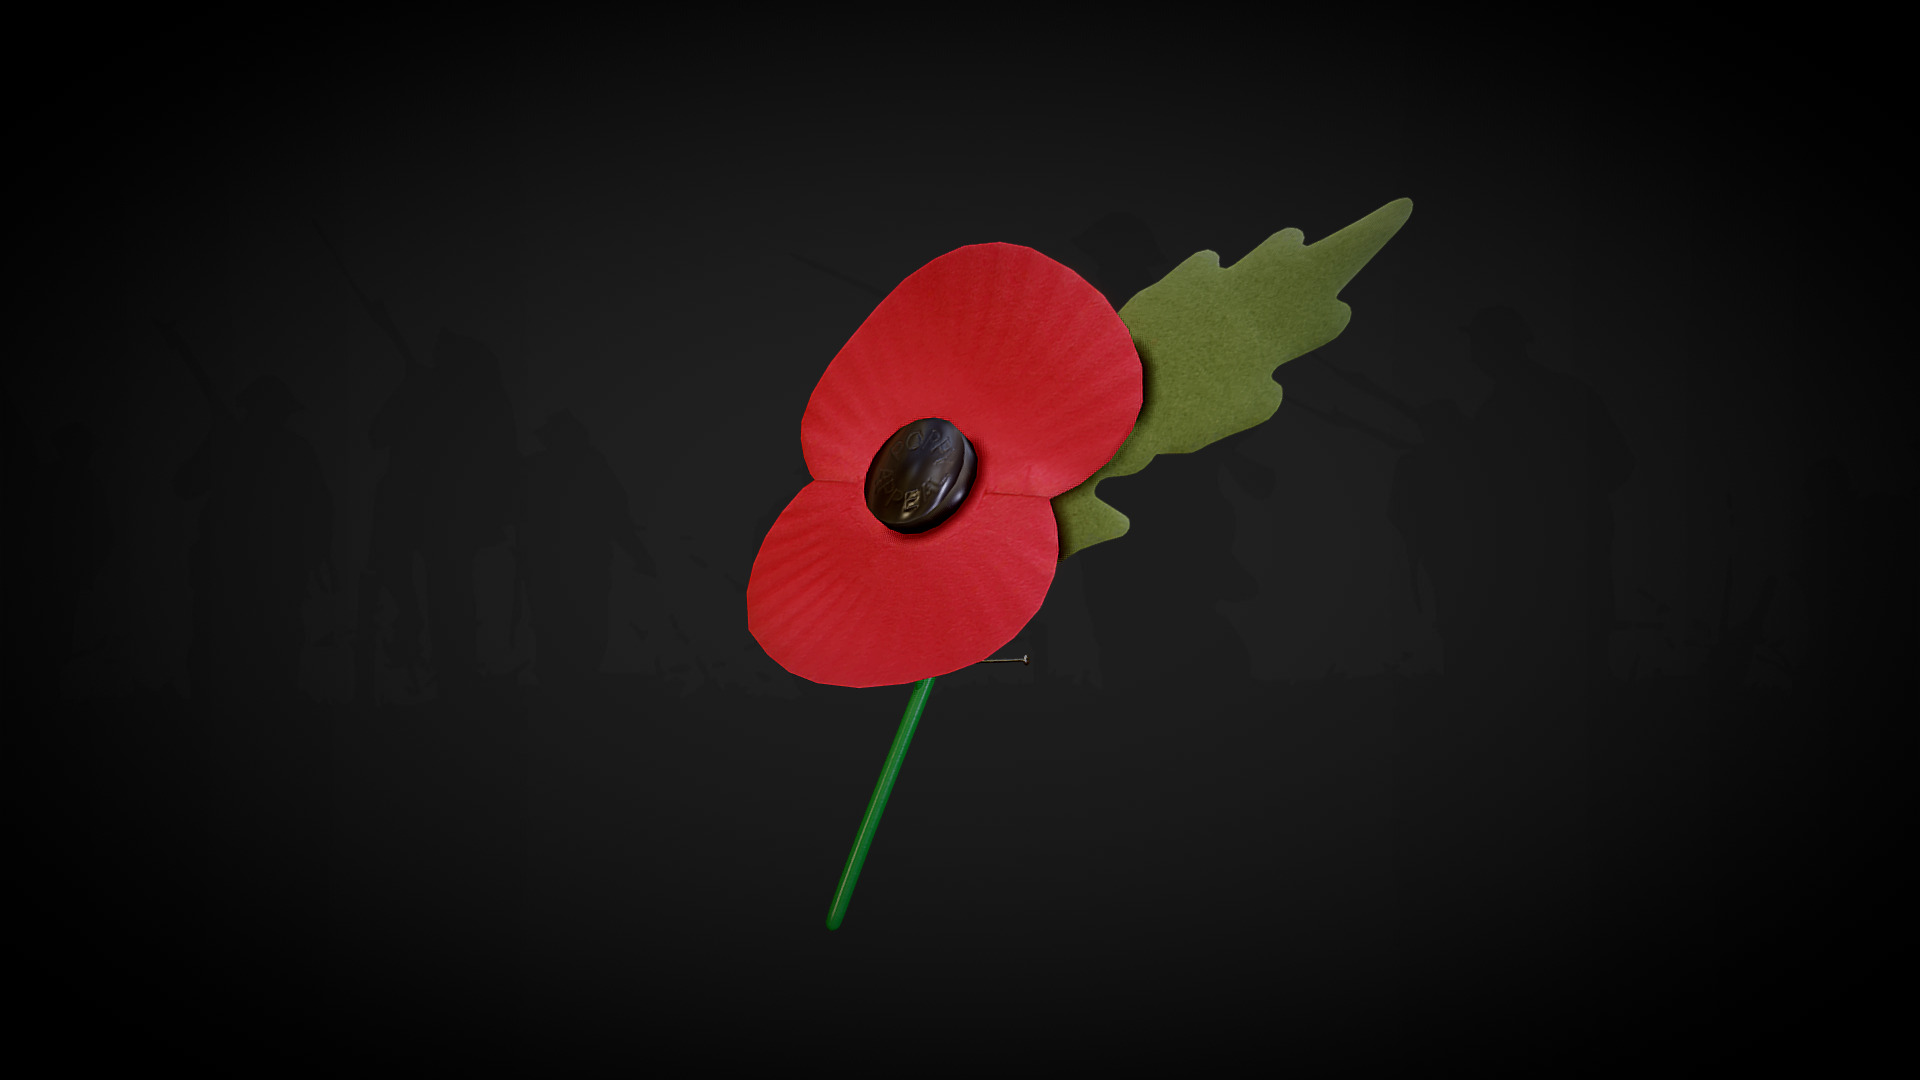 Remembrance Day Poppy